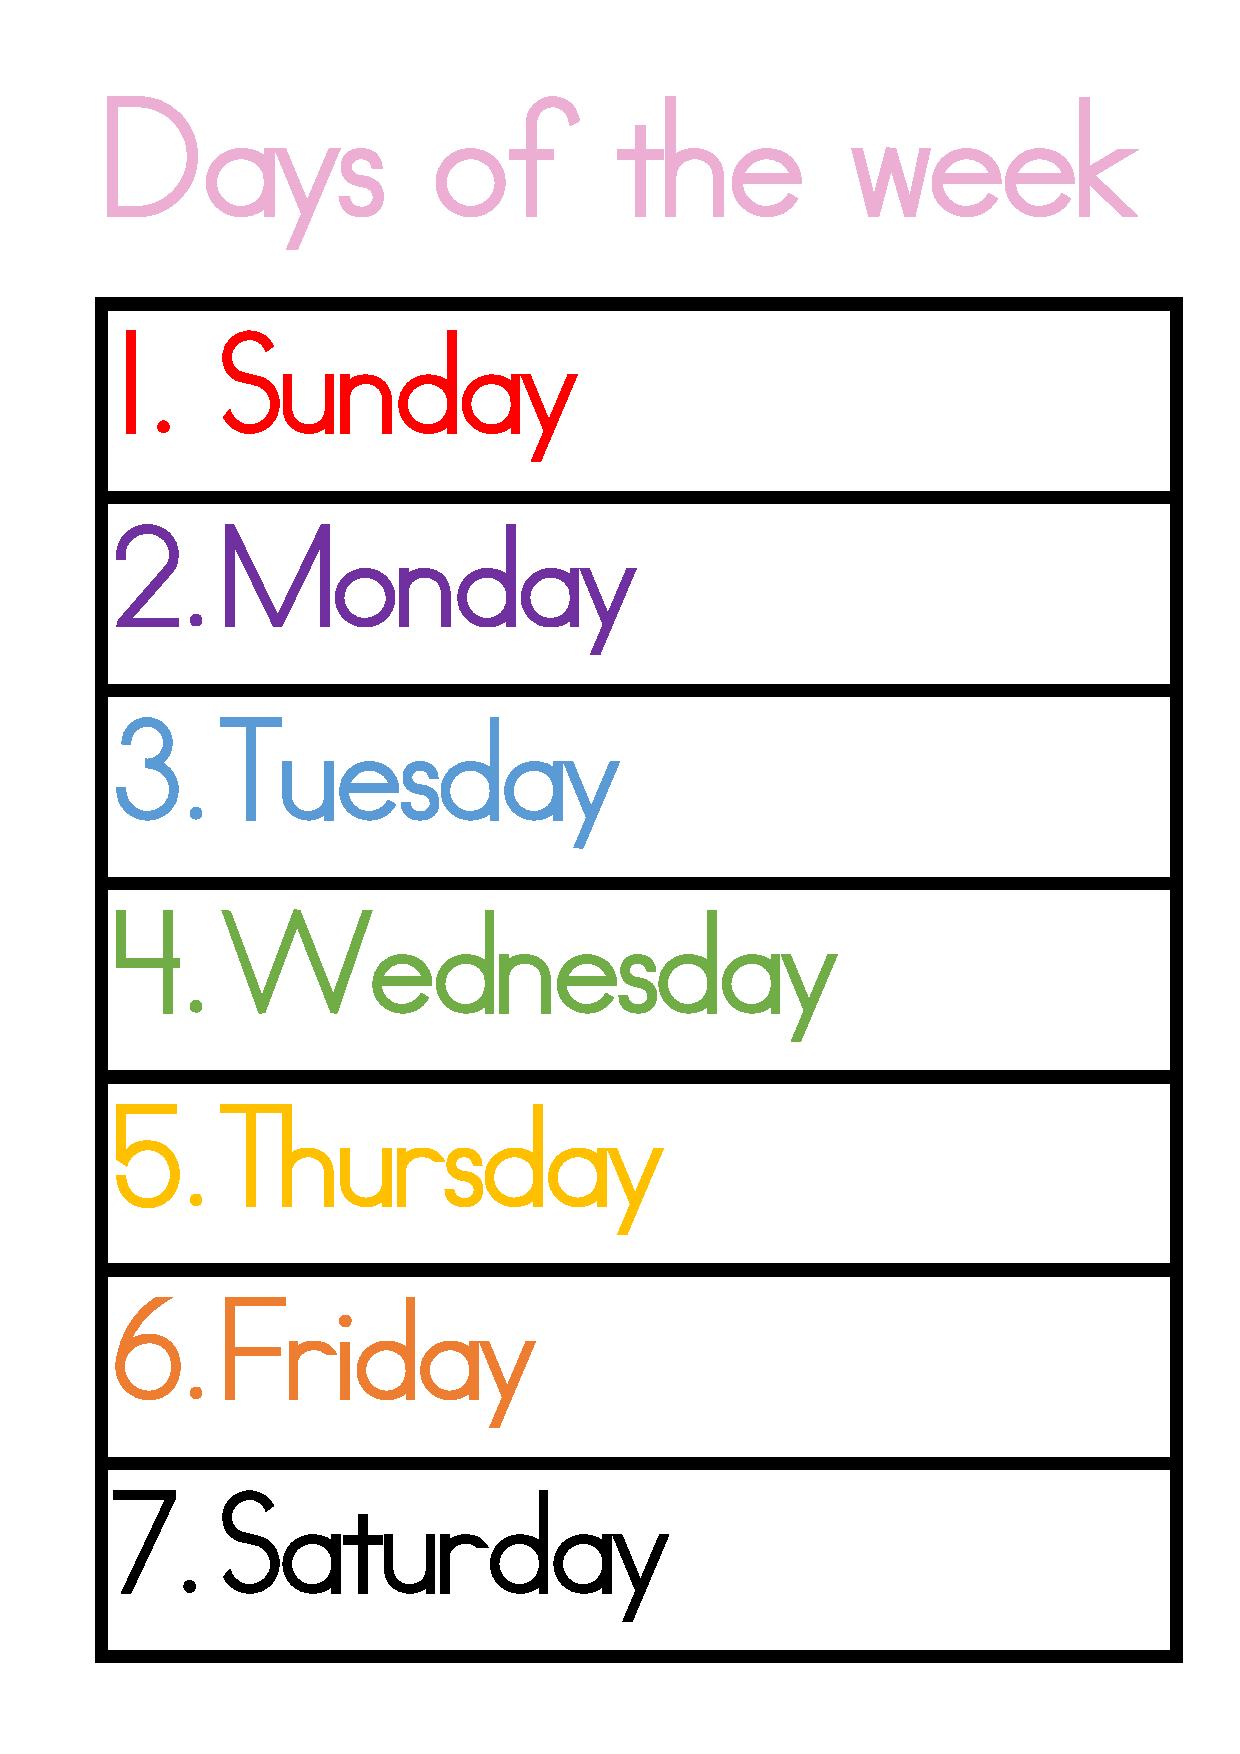 Days Of The Week Chart canoeracing org uk